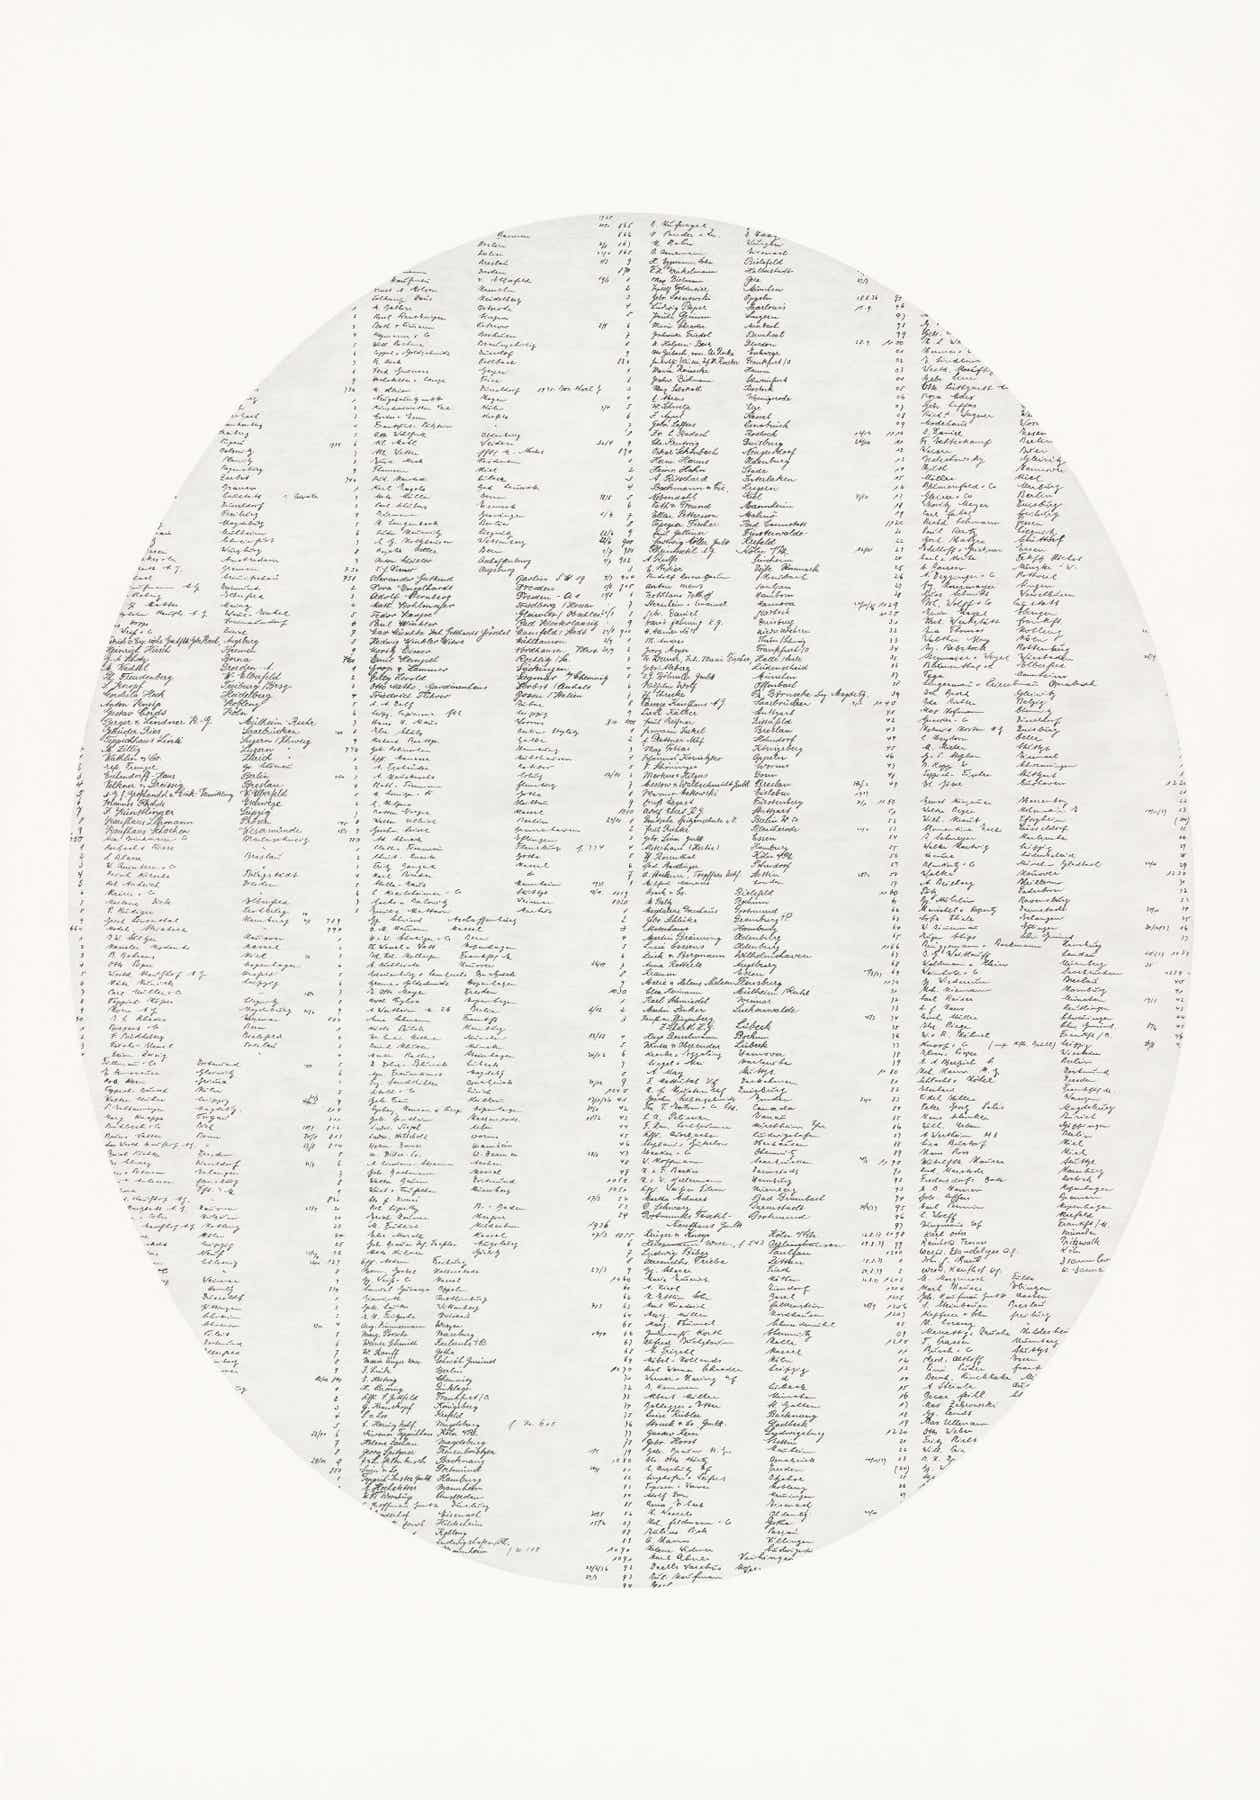 Pencil drawing of the 38 part series »Spitzenwaren« [Lace Goods] by Herbert Stattler.